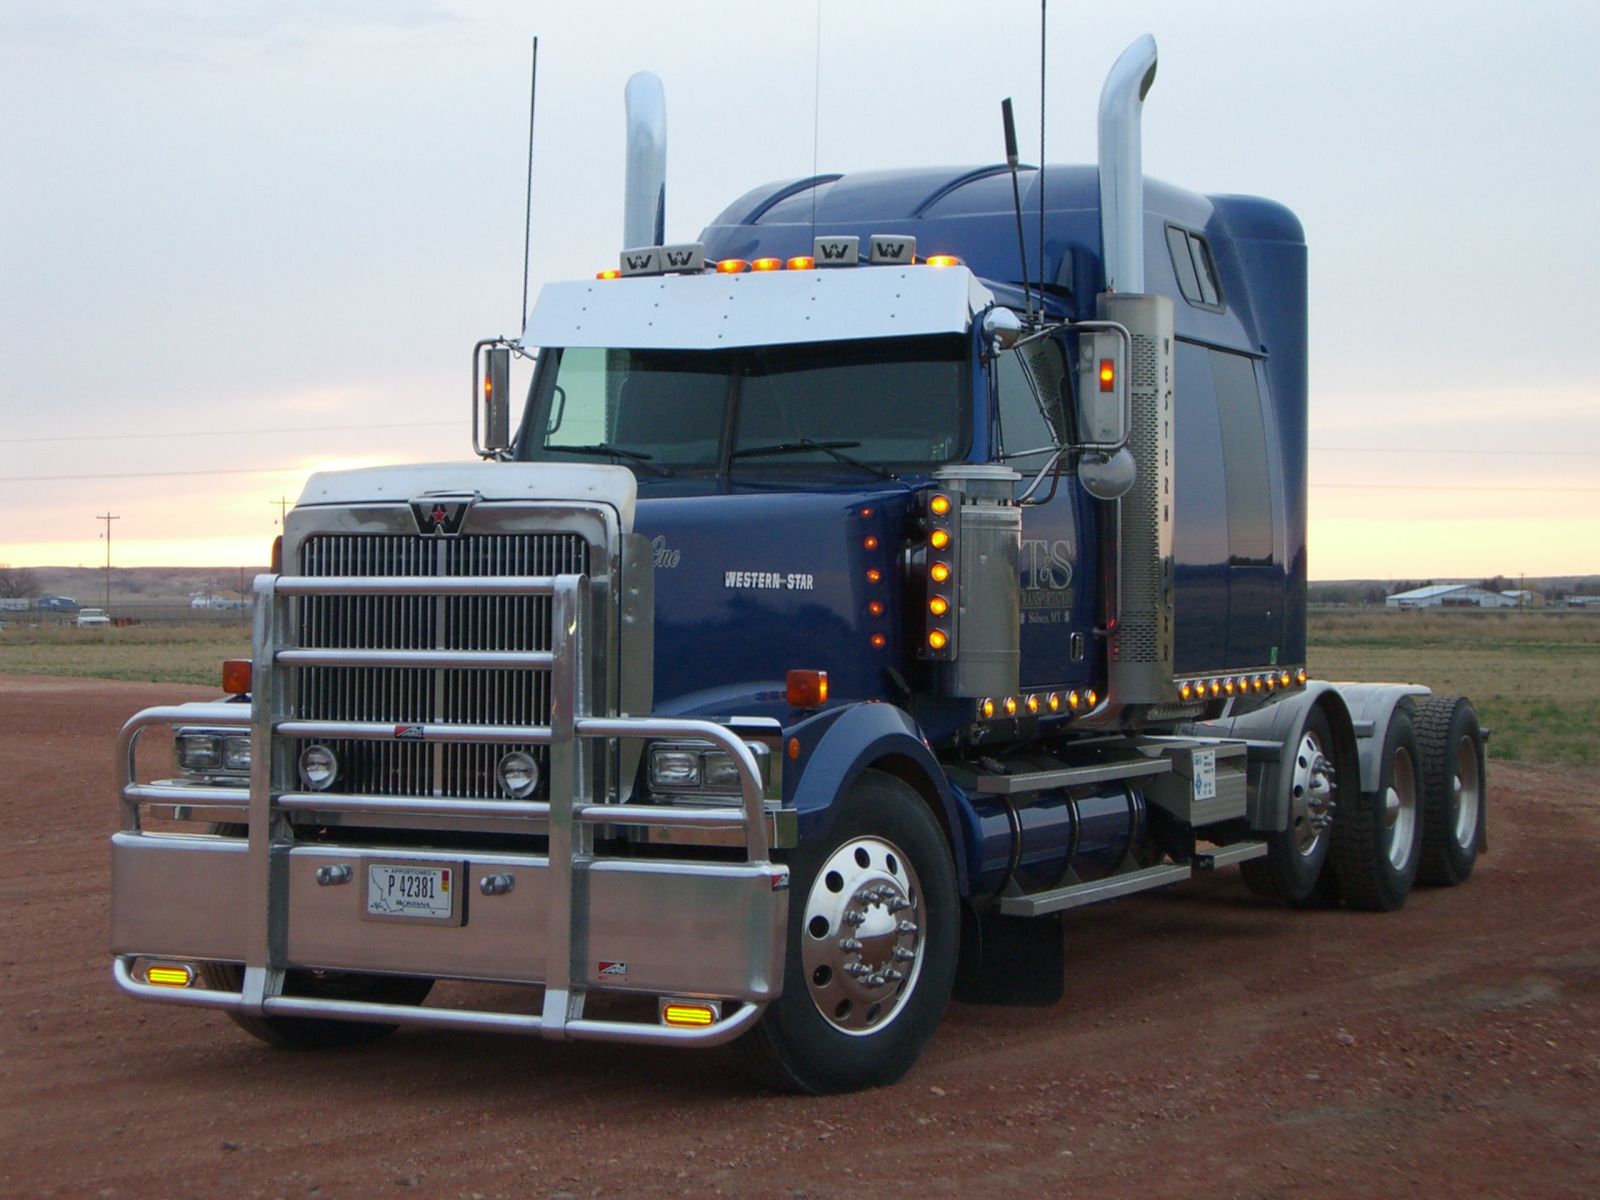 SEMI truck tractor trailer transport big rig transportation lorry vehicle wallpaperx1200